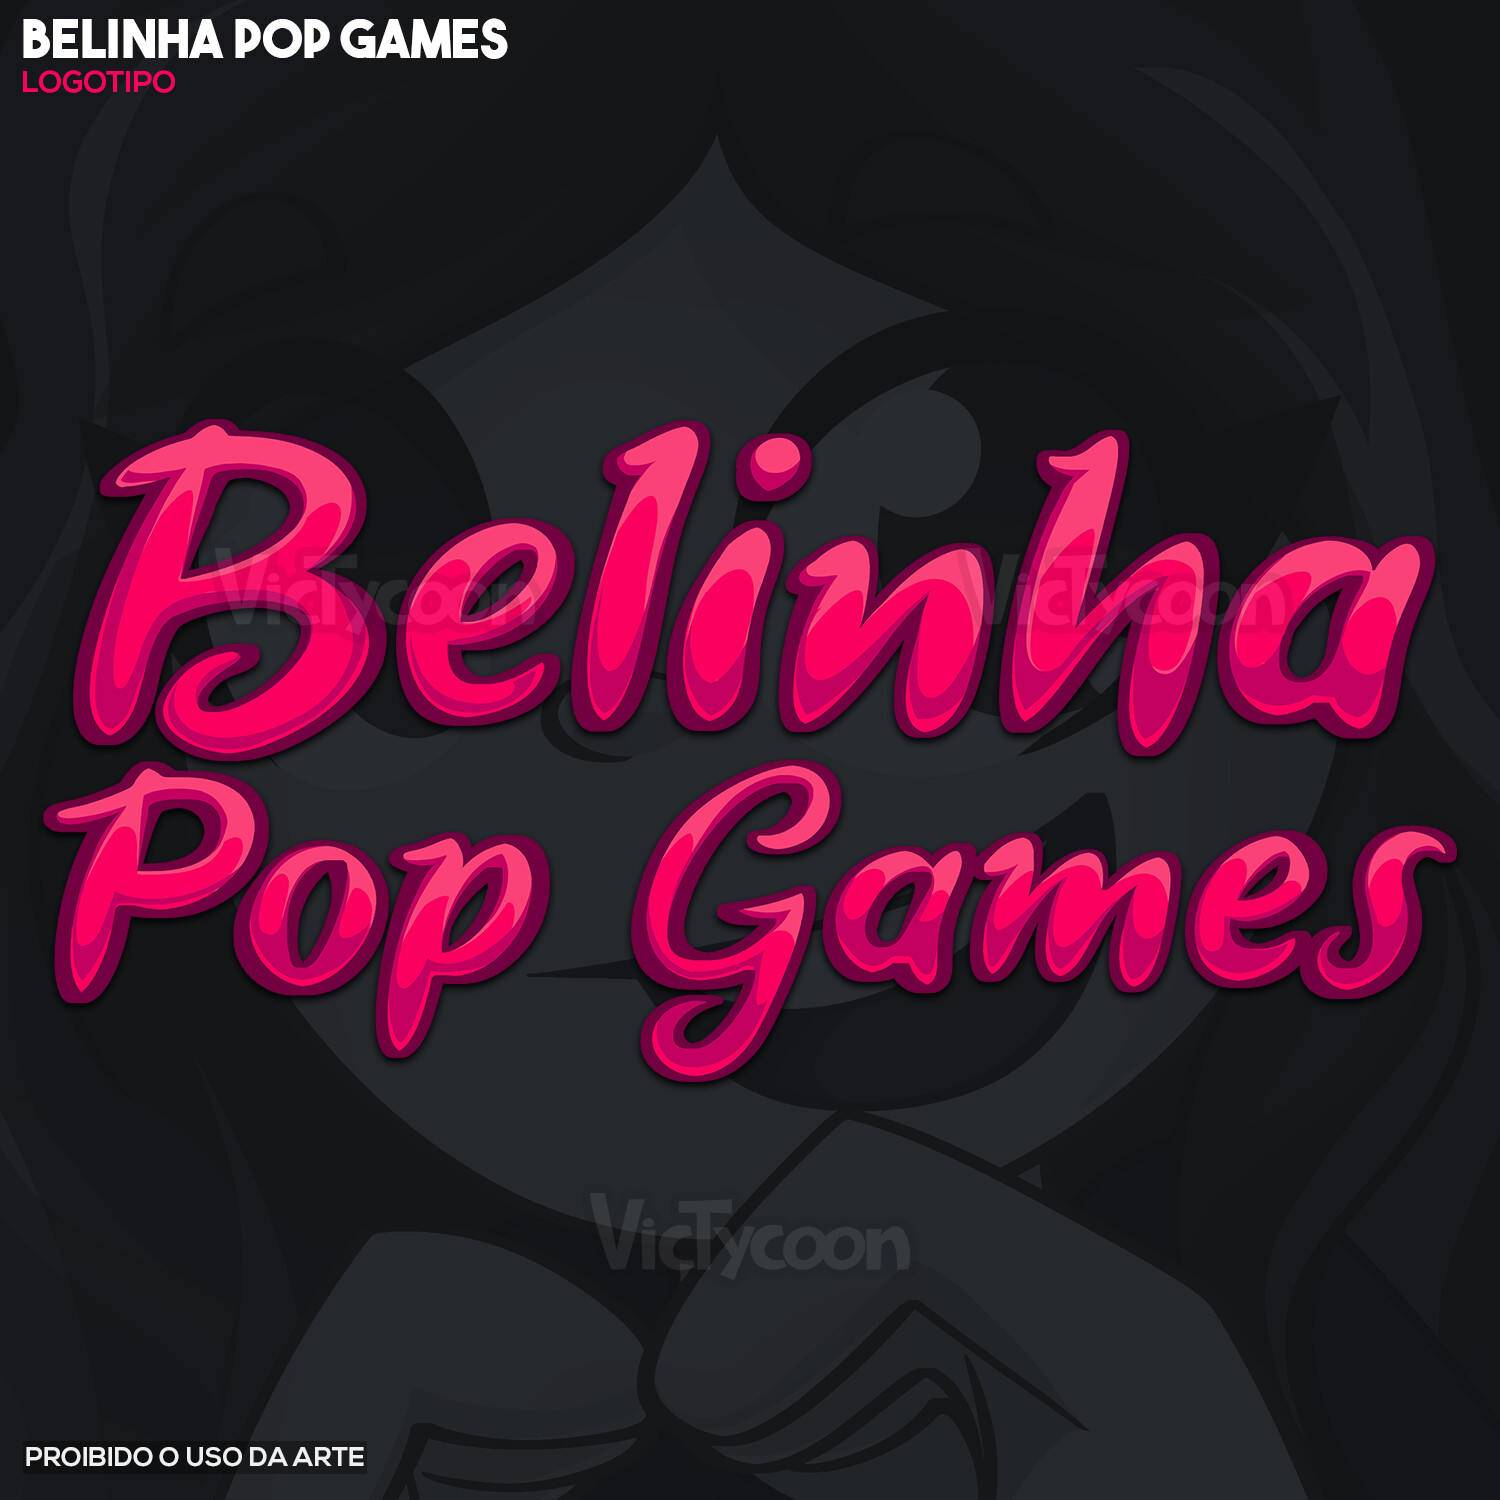 VicTycoon Art - BANNER, AVATAR, LOGOTIPO - Belinha Pop Games ( Roblox )